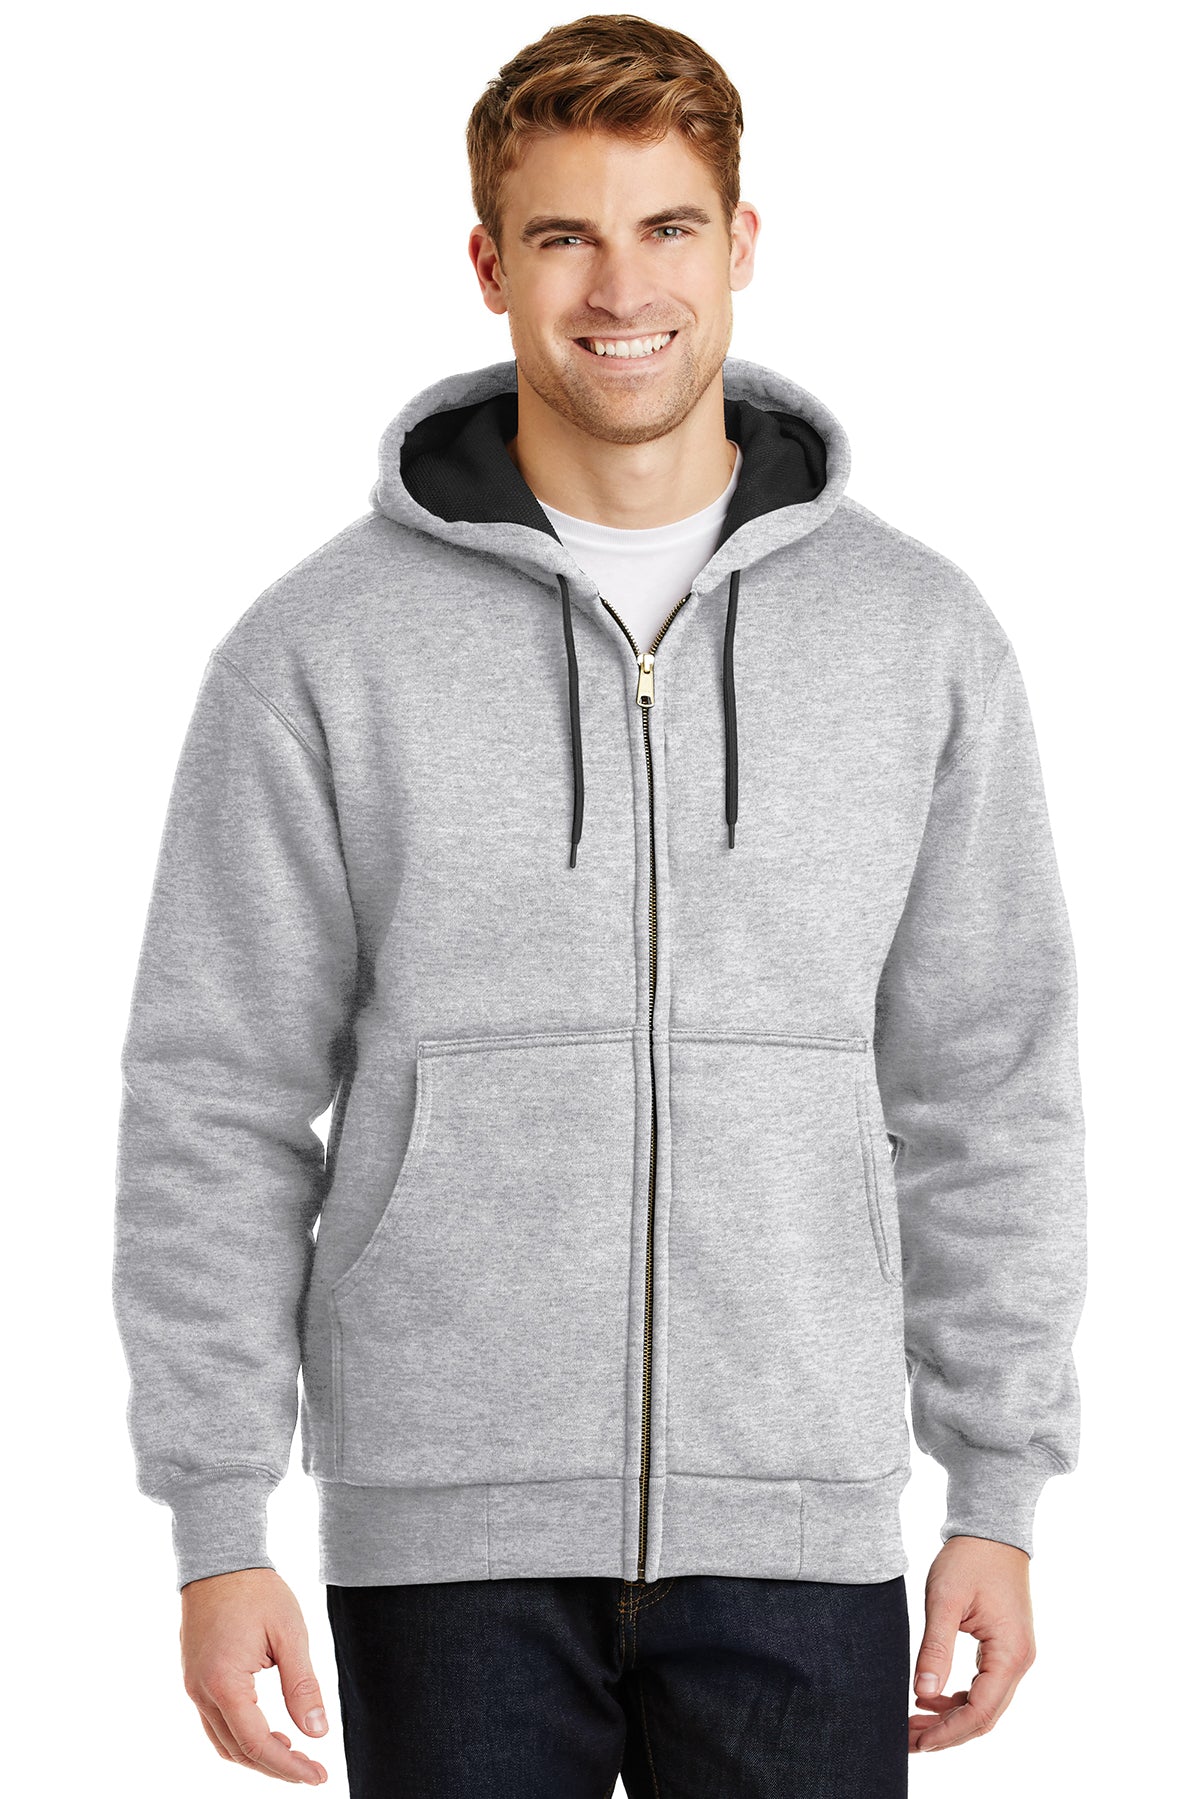 Buy athletic-heather CornerStone Heavyweight Full-Zip Hooded Sweatshirt with Thermal Lining